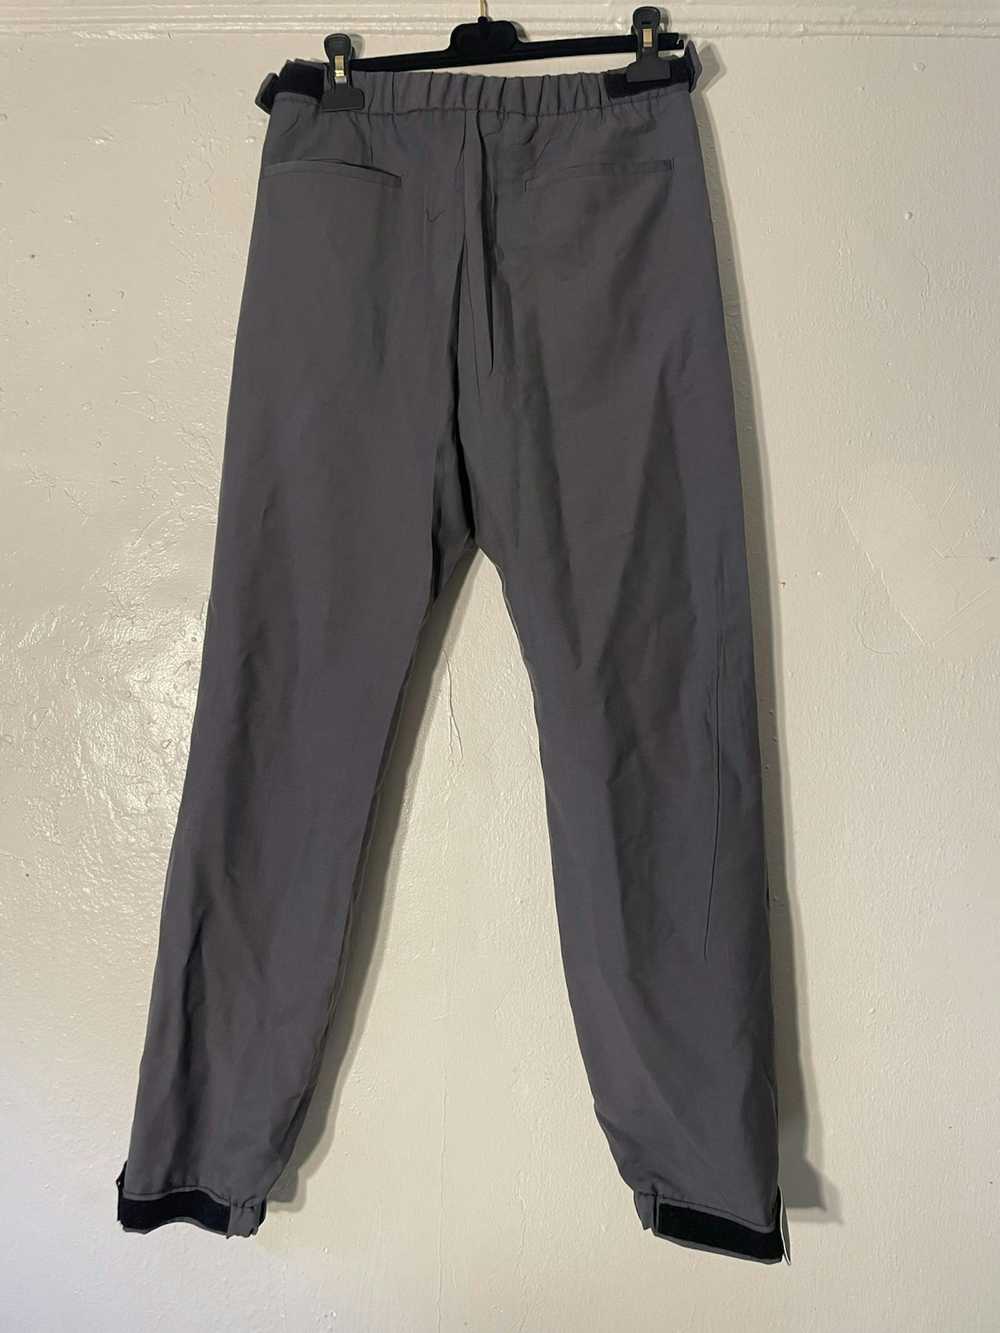 Prada Prada gray ankle strap pants SS2018 - image 3